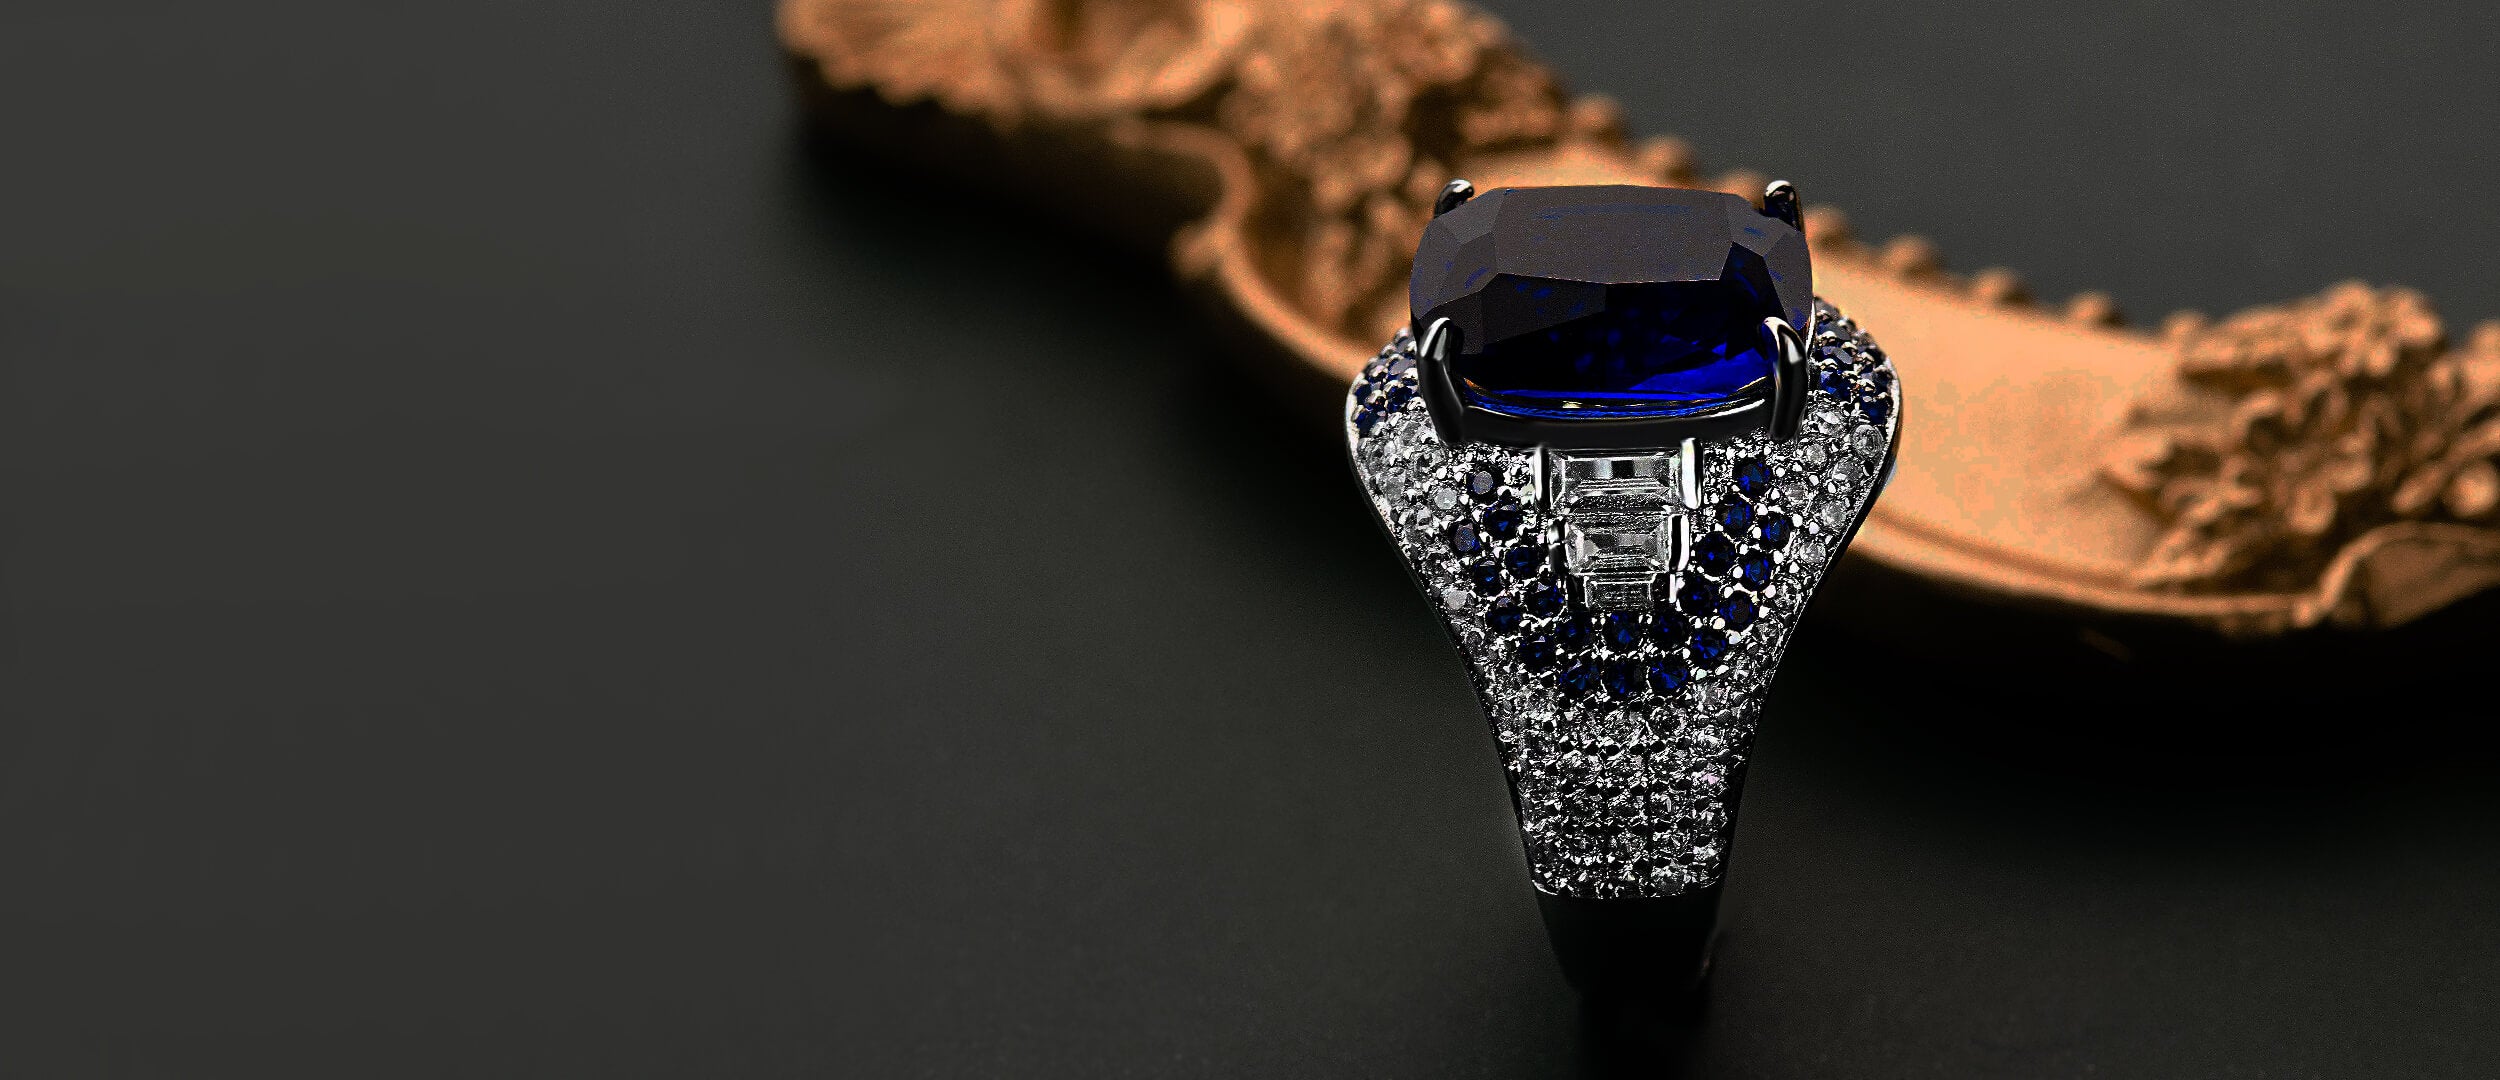 Sapphire Promise Rings in 18K Gold | Custom Sapphire Engagement Rings | Modern Gem Jewelry